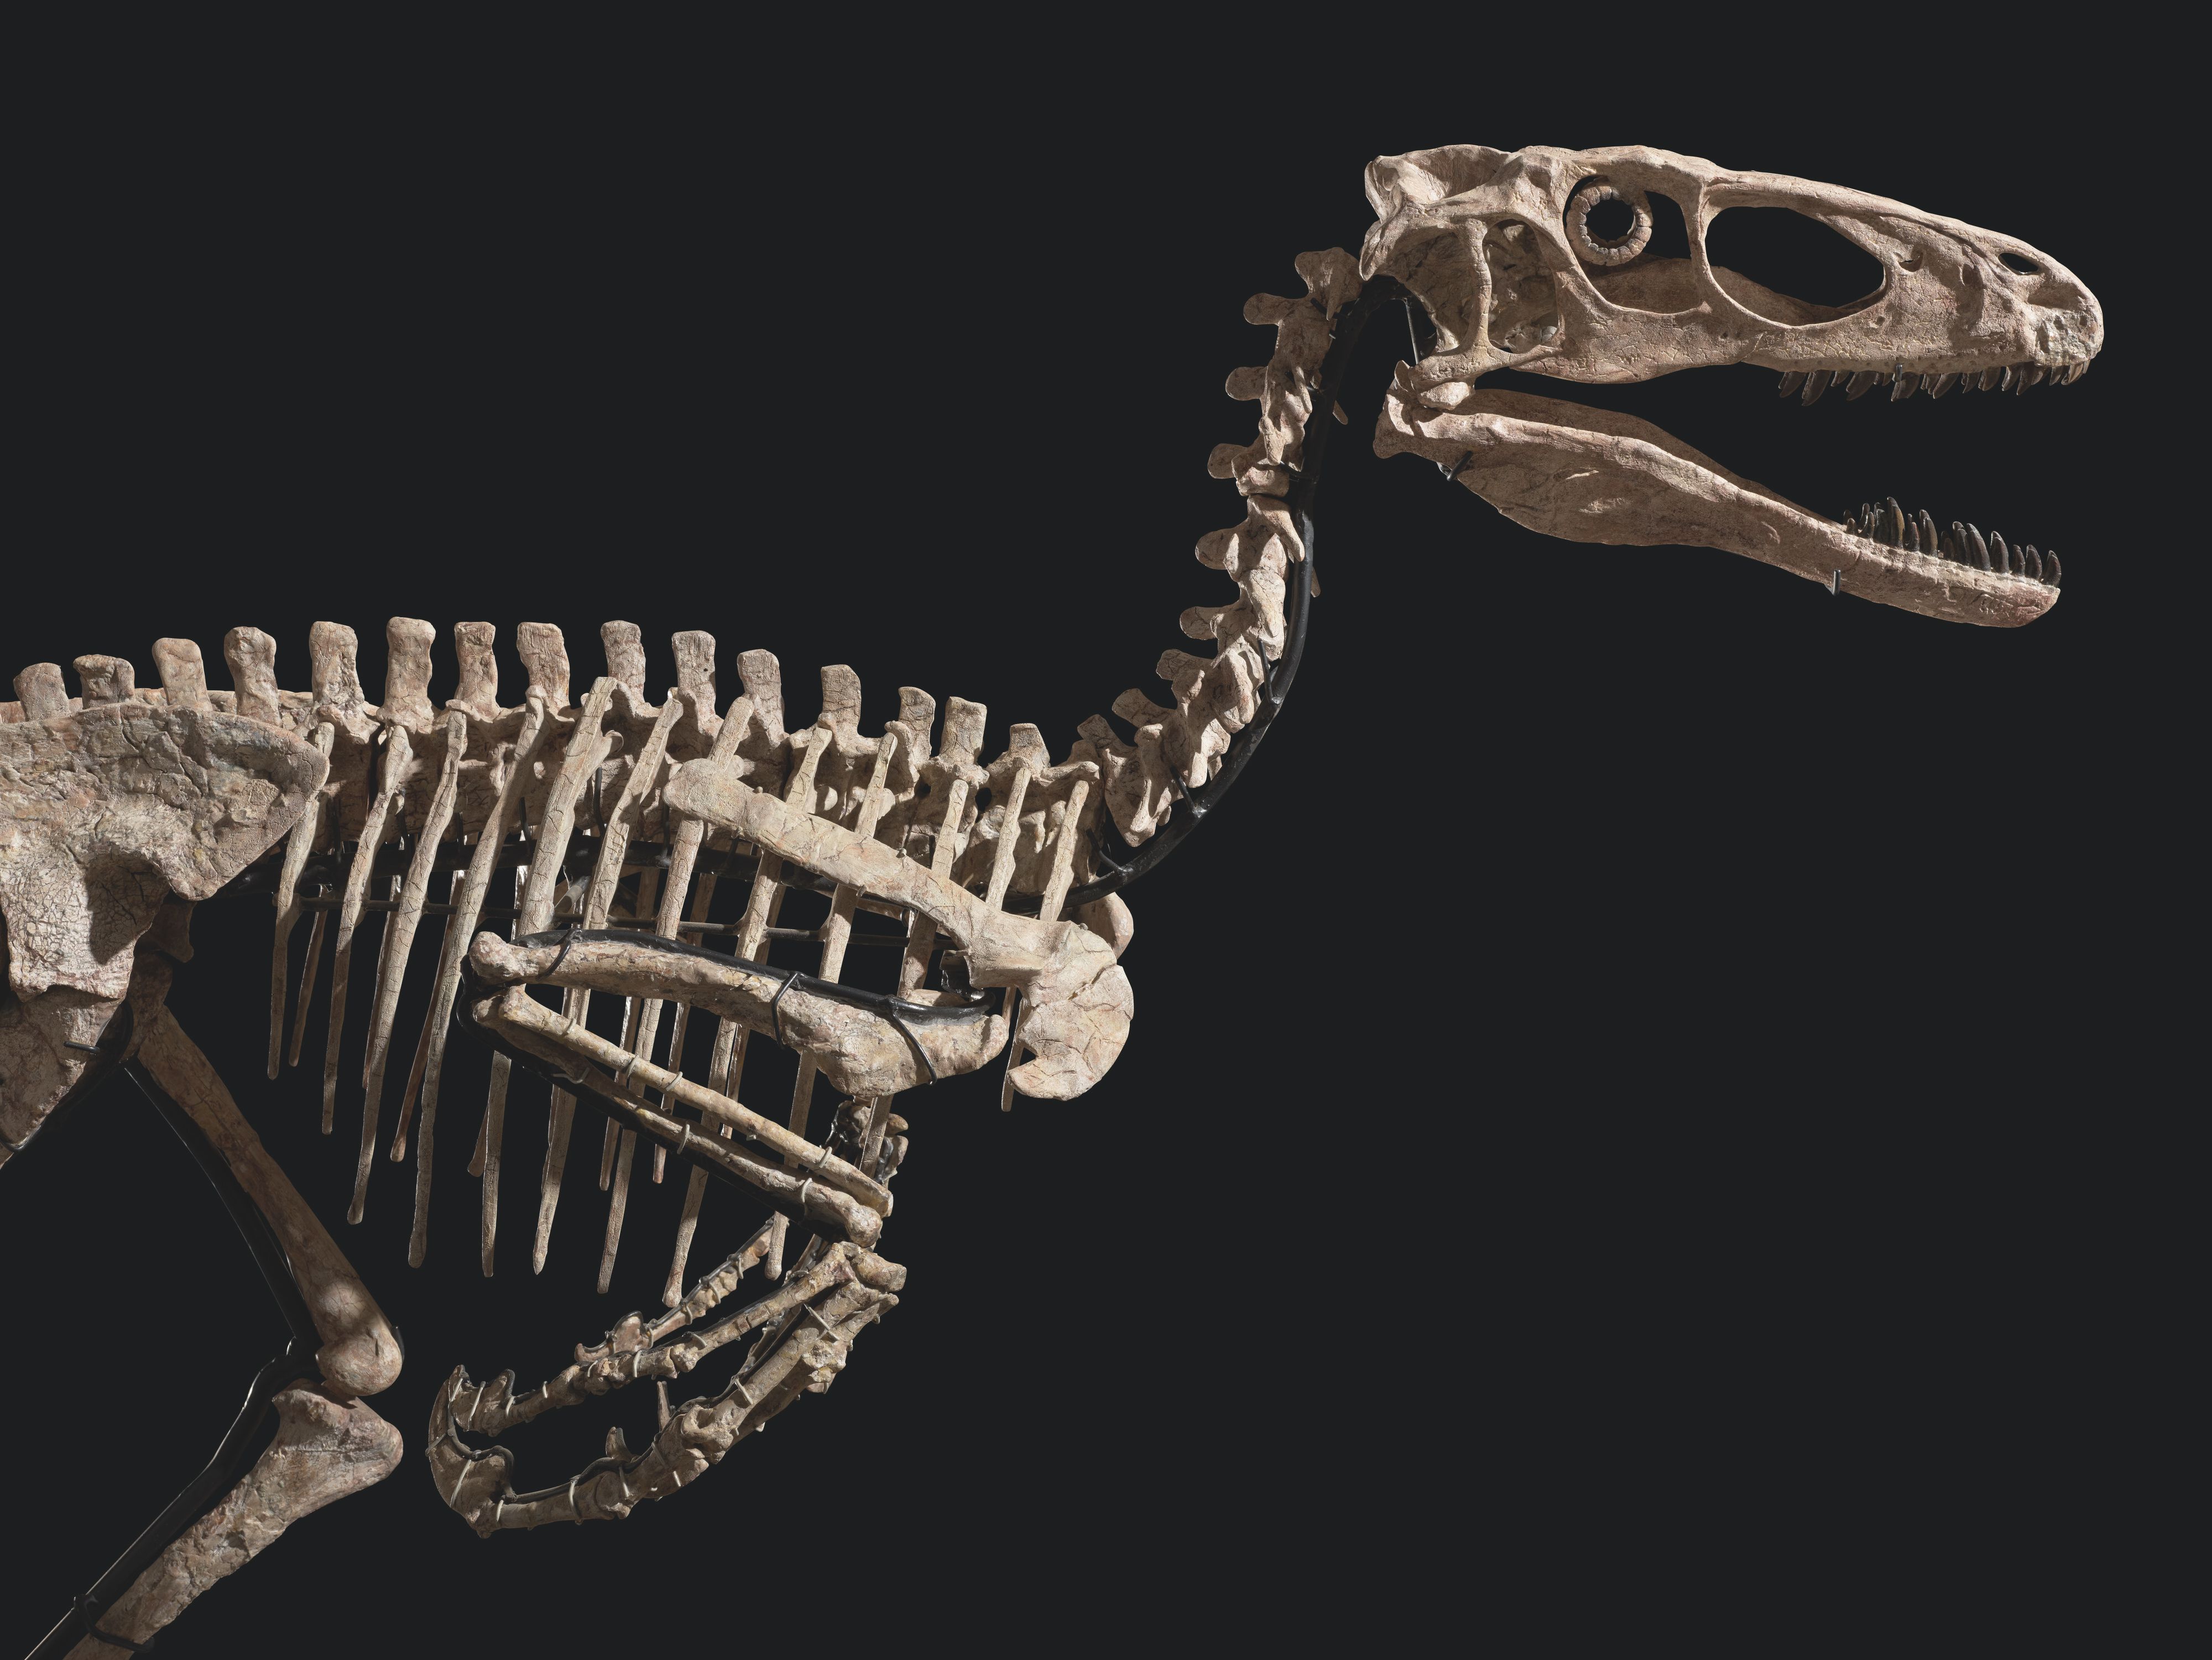 Killer VELOCIRAPTOR Claw • Jurassic Park • Raptor dinosaur fossil replica 